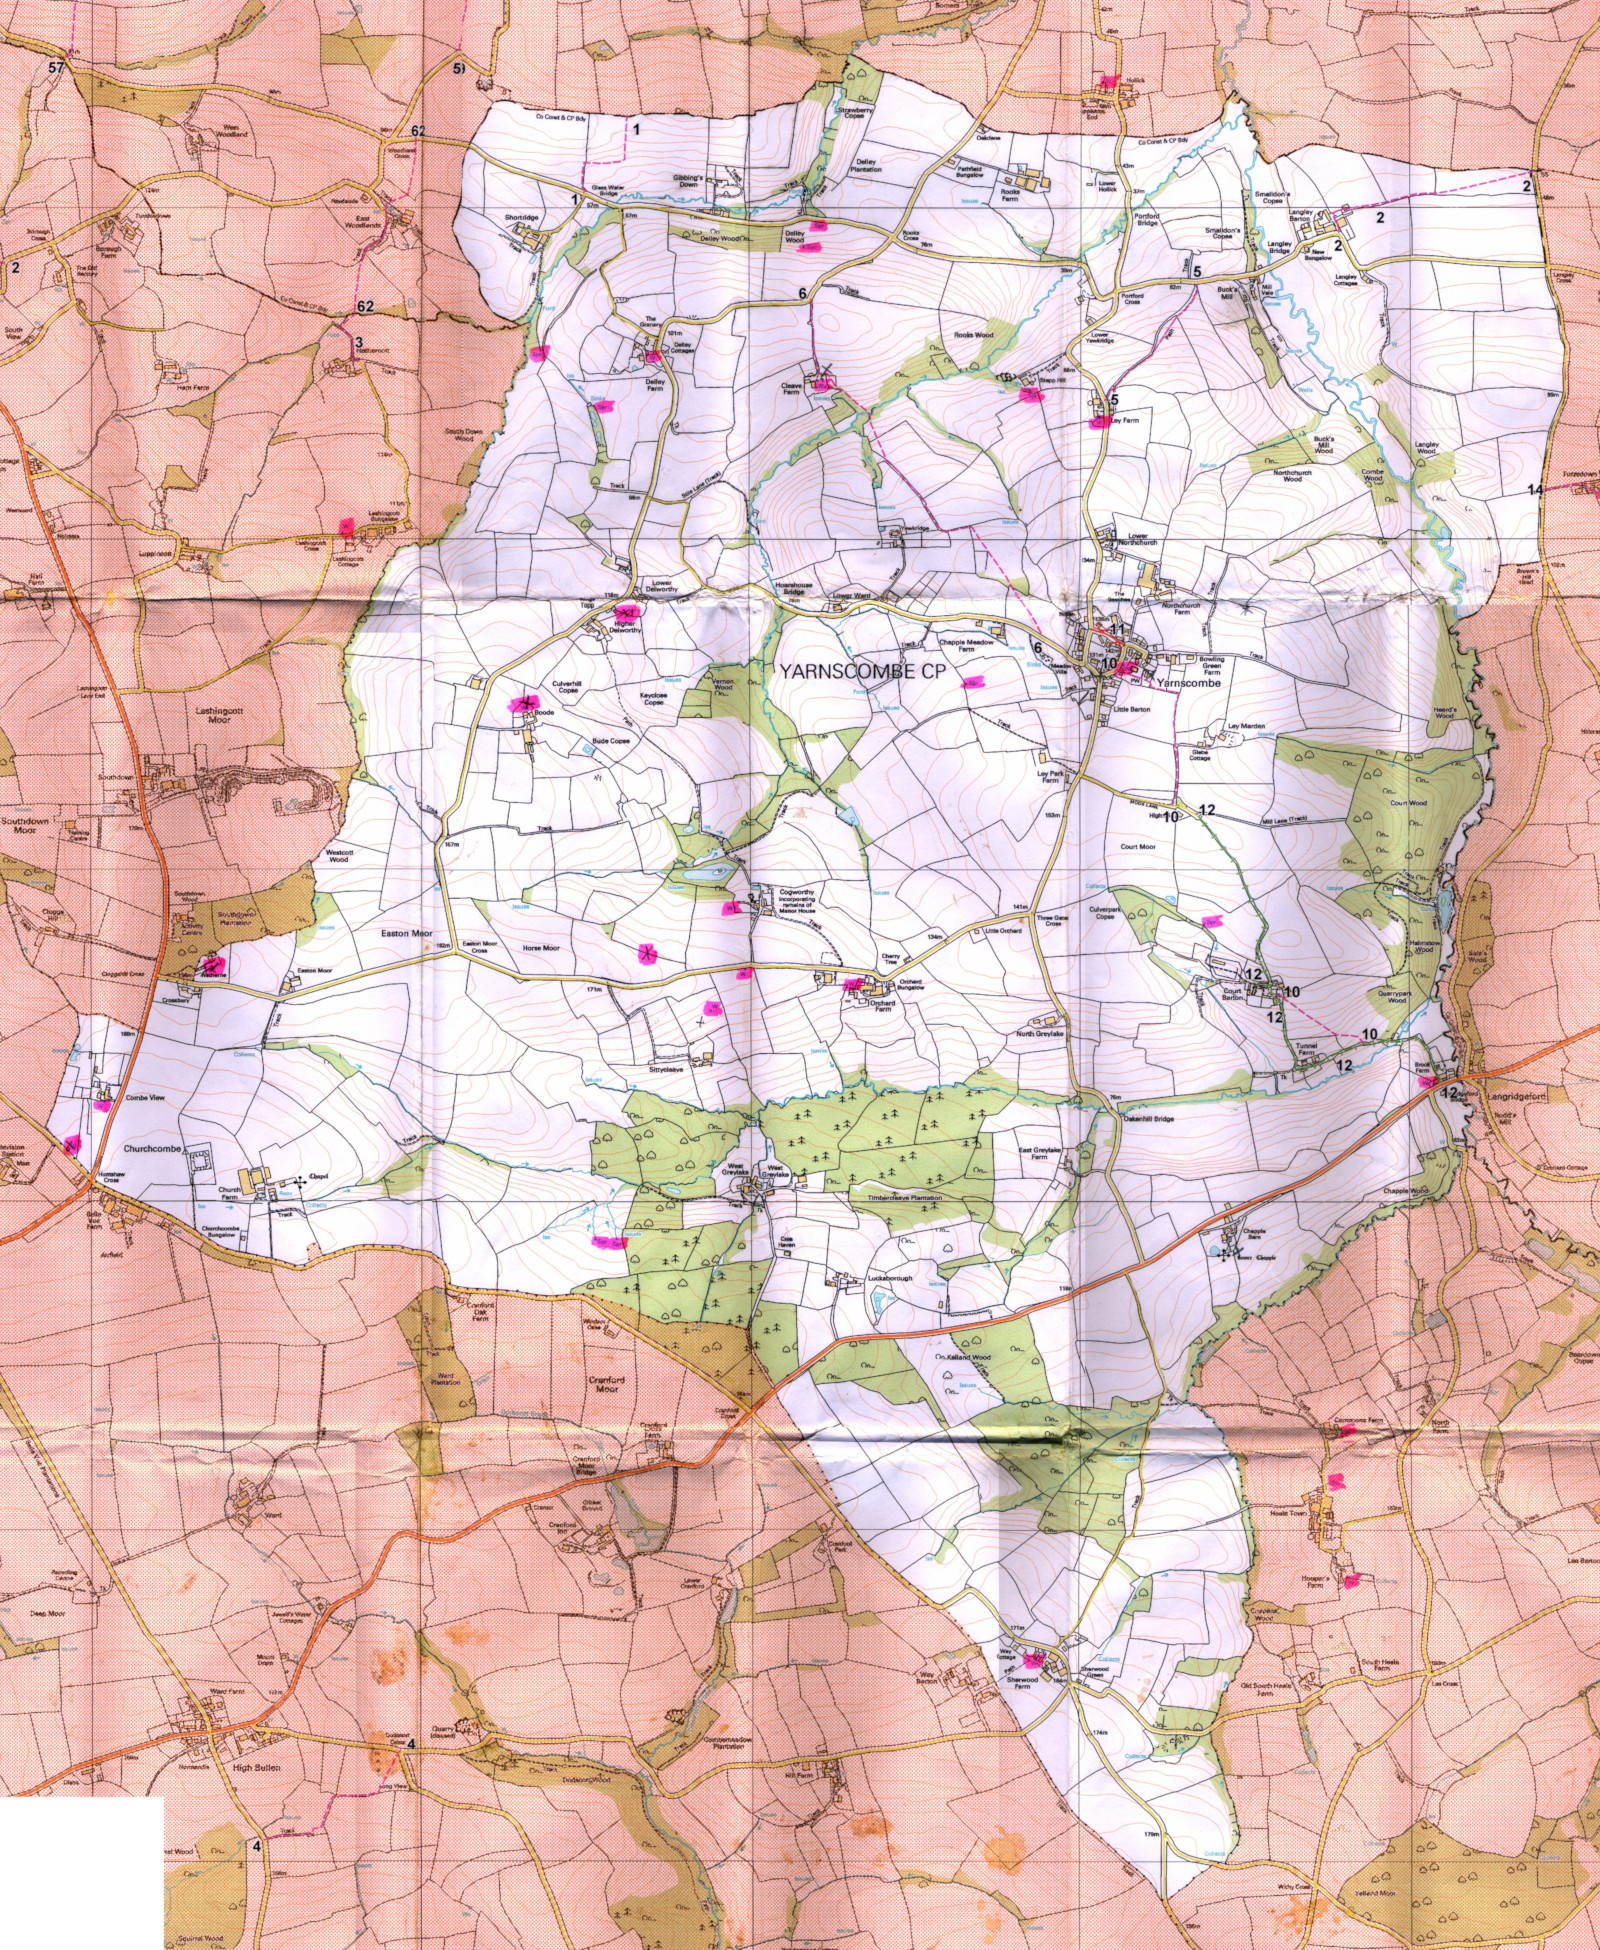 Yarnscombe parish map